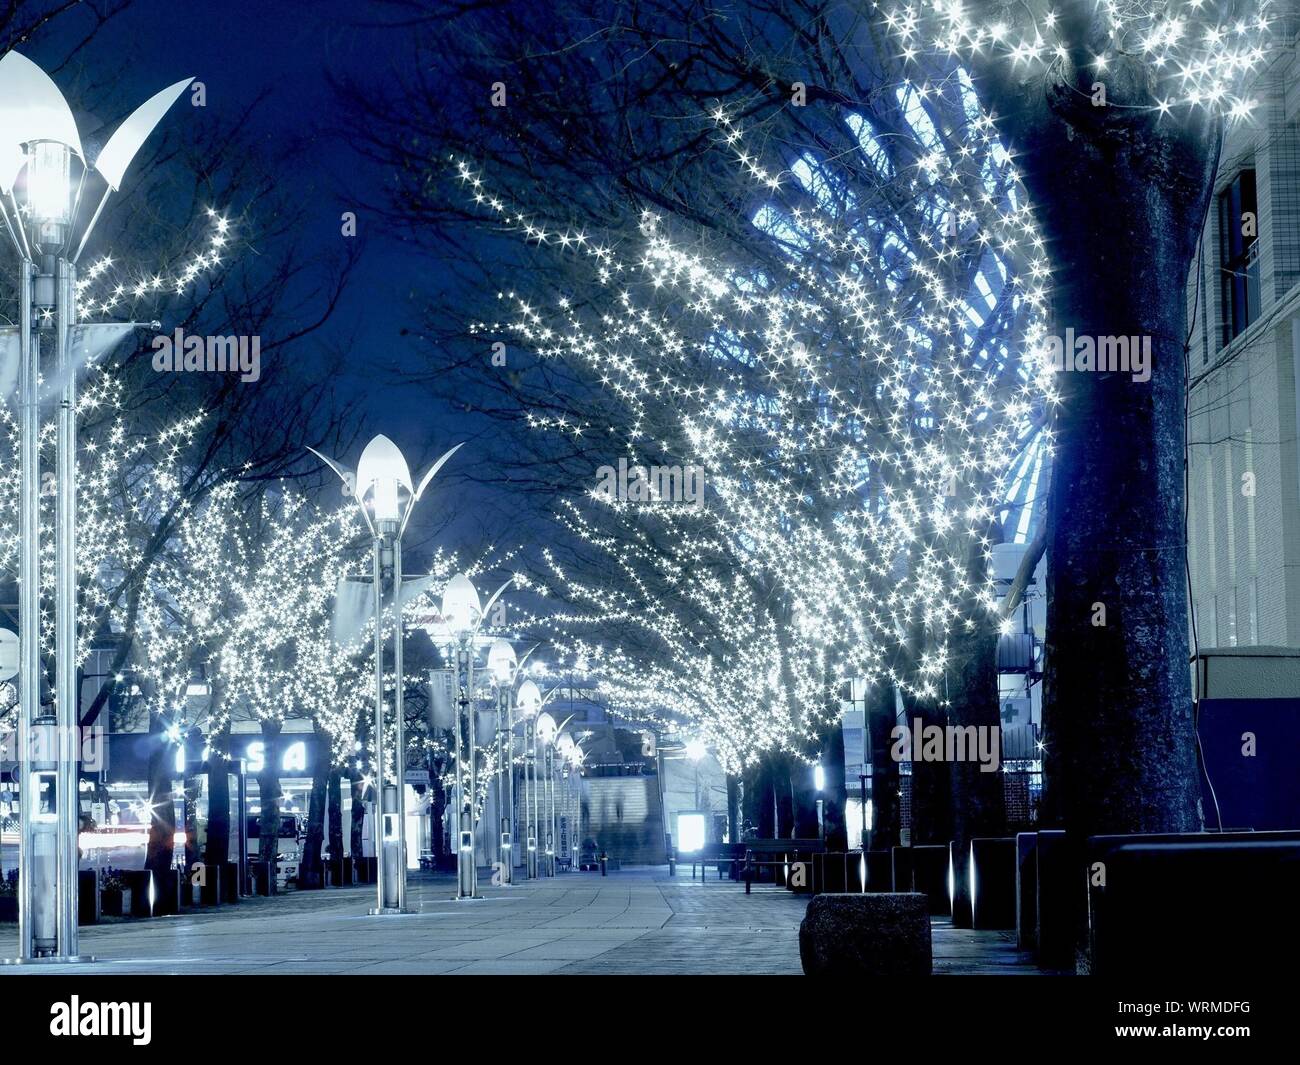 Illuminated Trees And Streetlights At Night Stock Photo